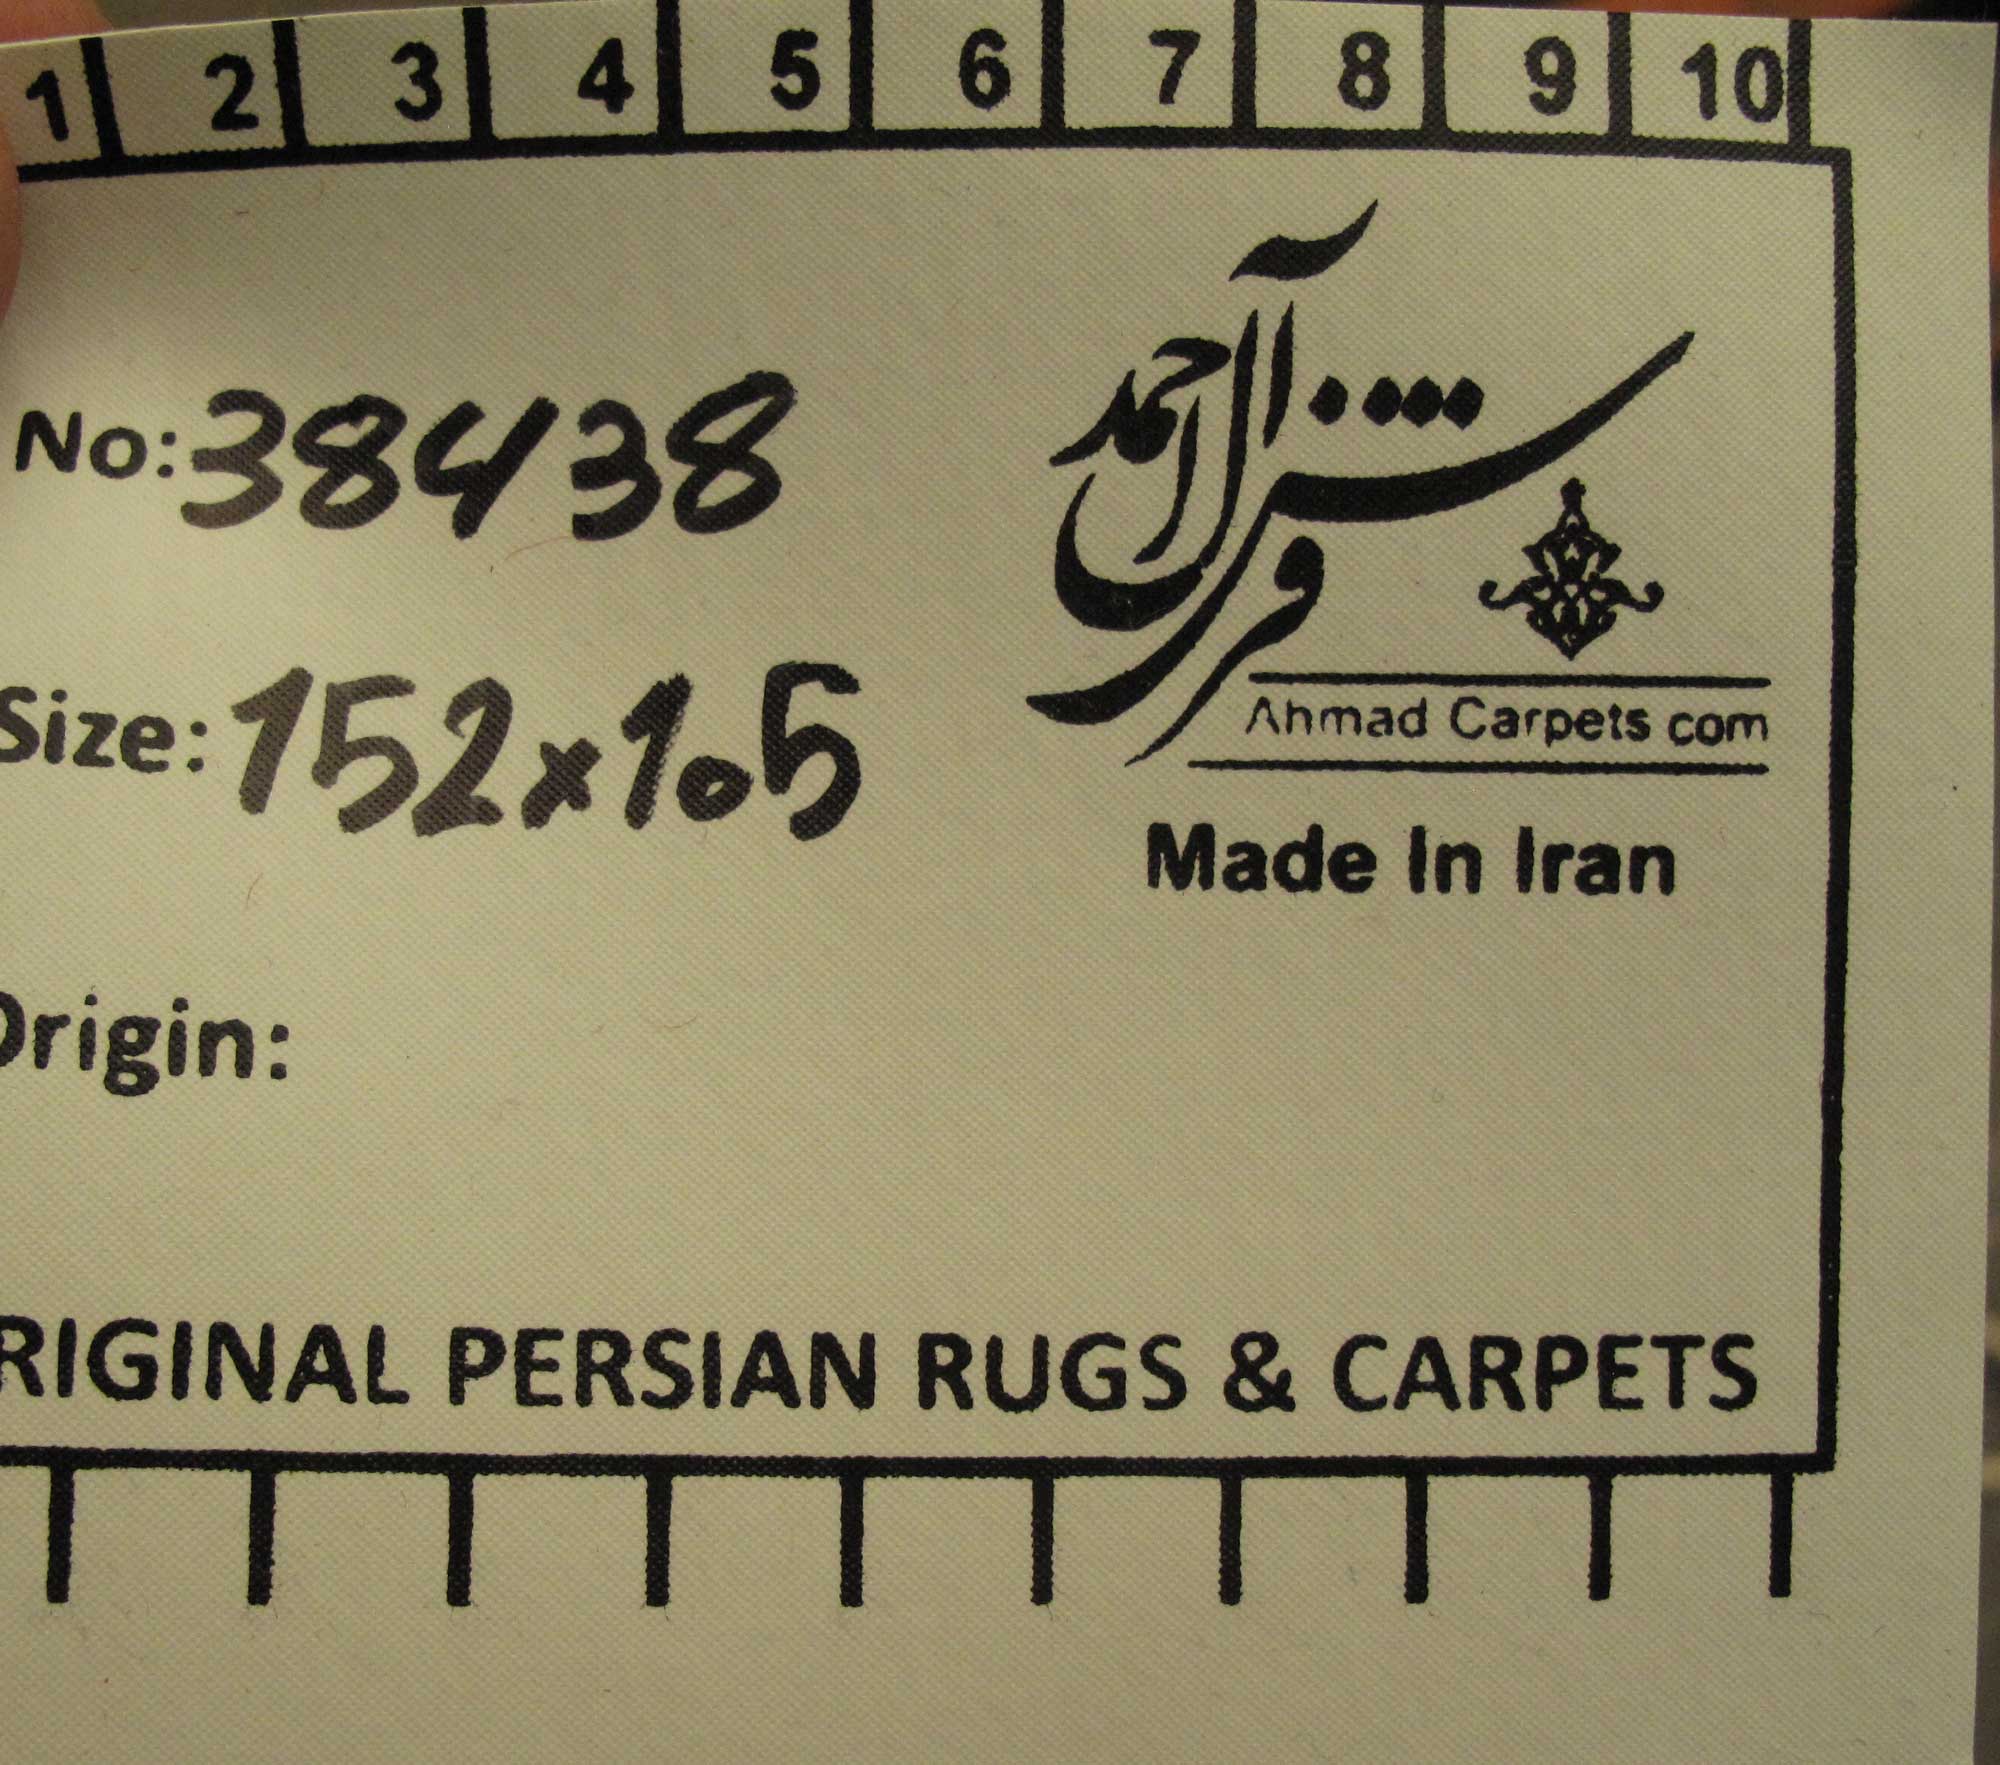 ۳۸۴۳۸ Shiraz 152×105 PP